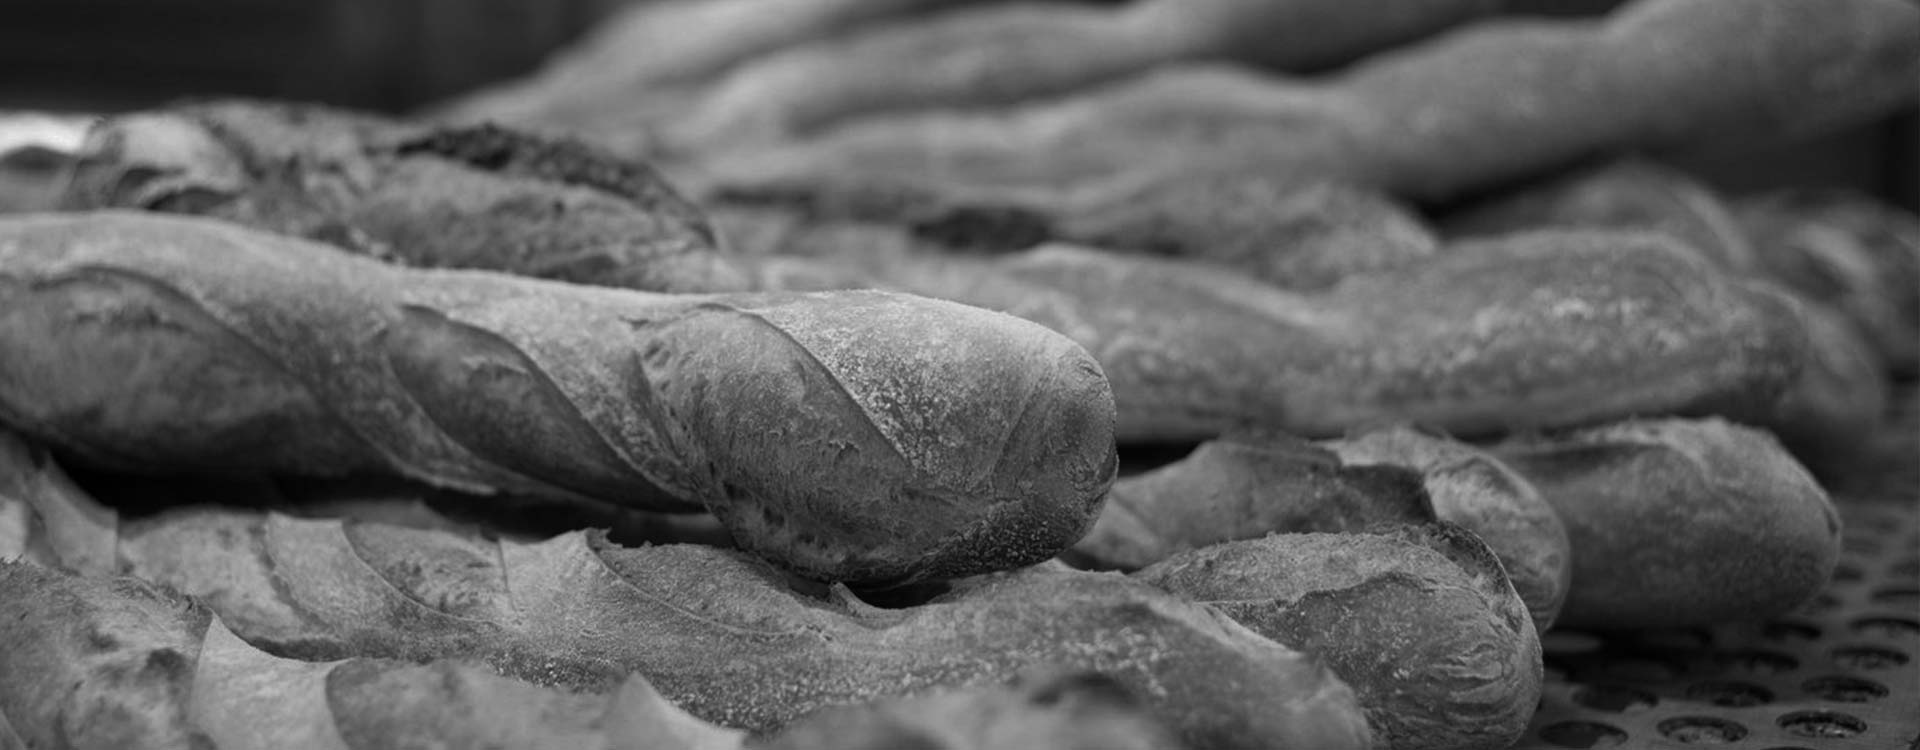 Fresh French Sticks - Friendly Loaf Bakery, Bury St Edmunds